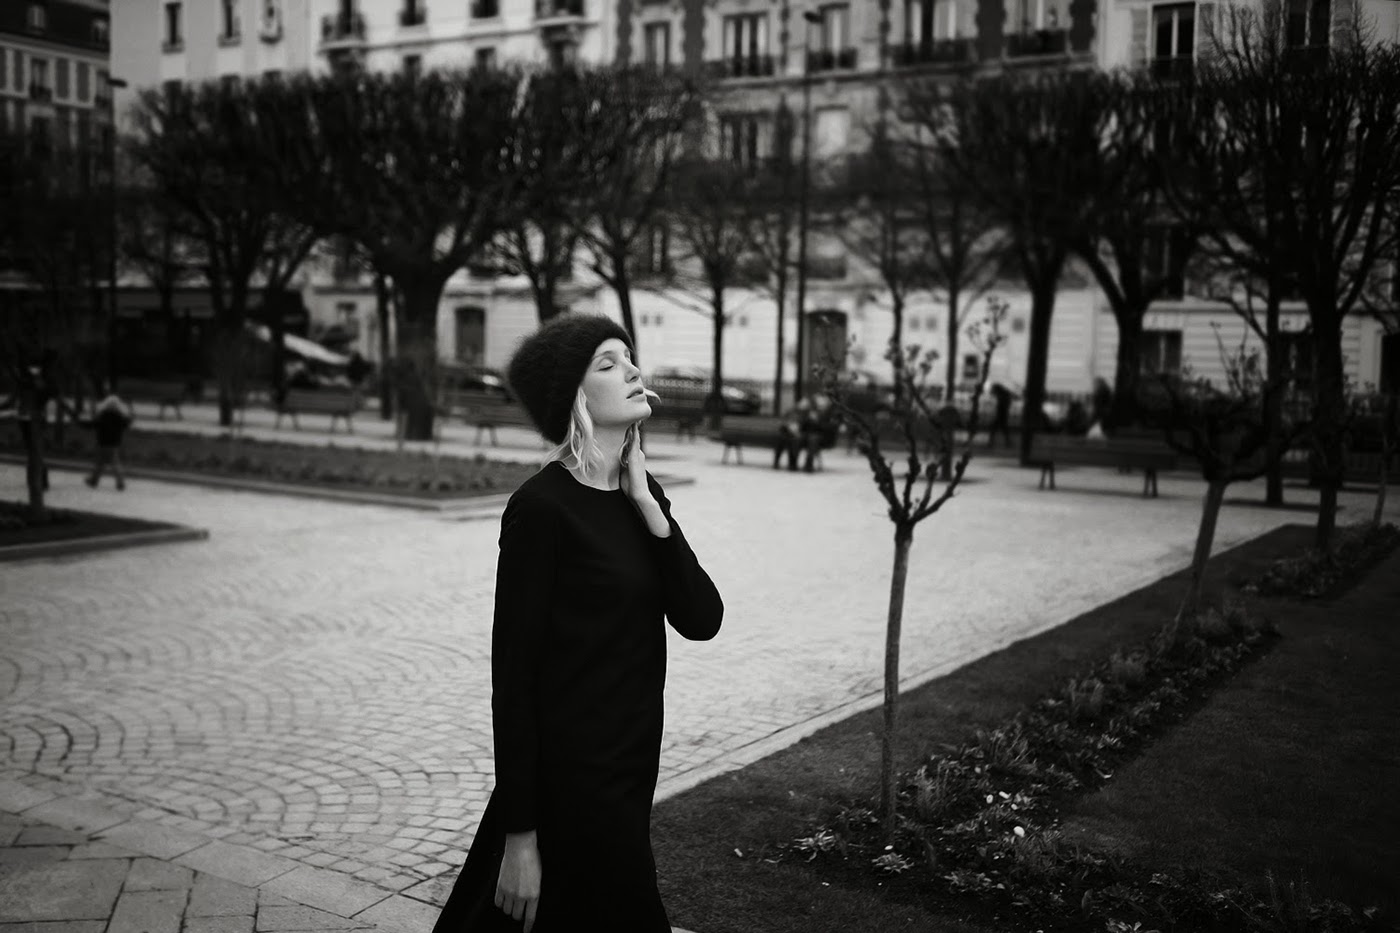 france nicolas emelien giovana gorassini portrait Paris 35mm f/2 Nikon D800